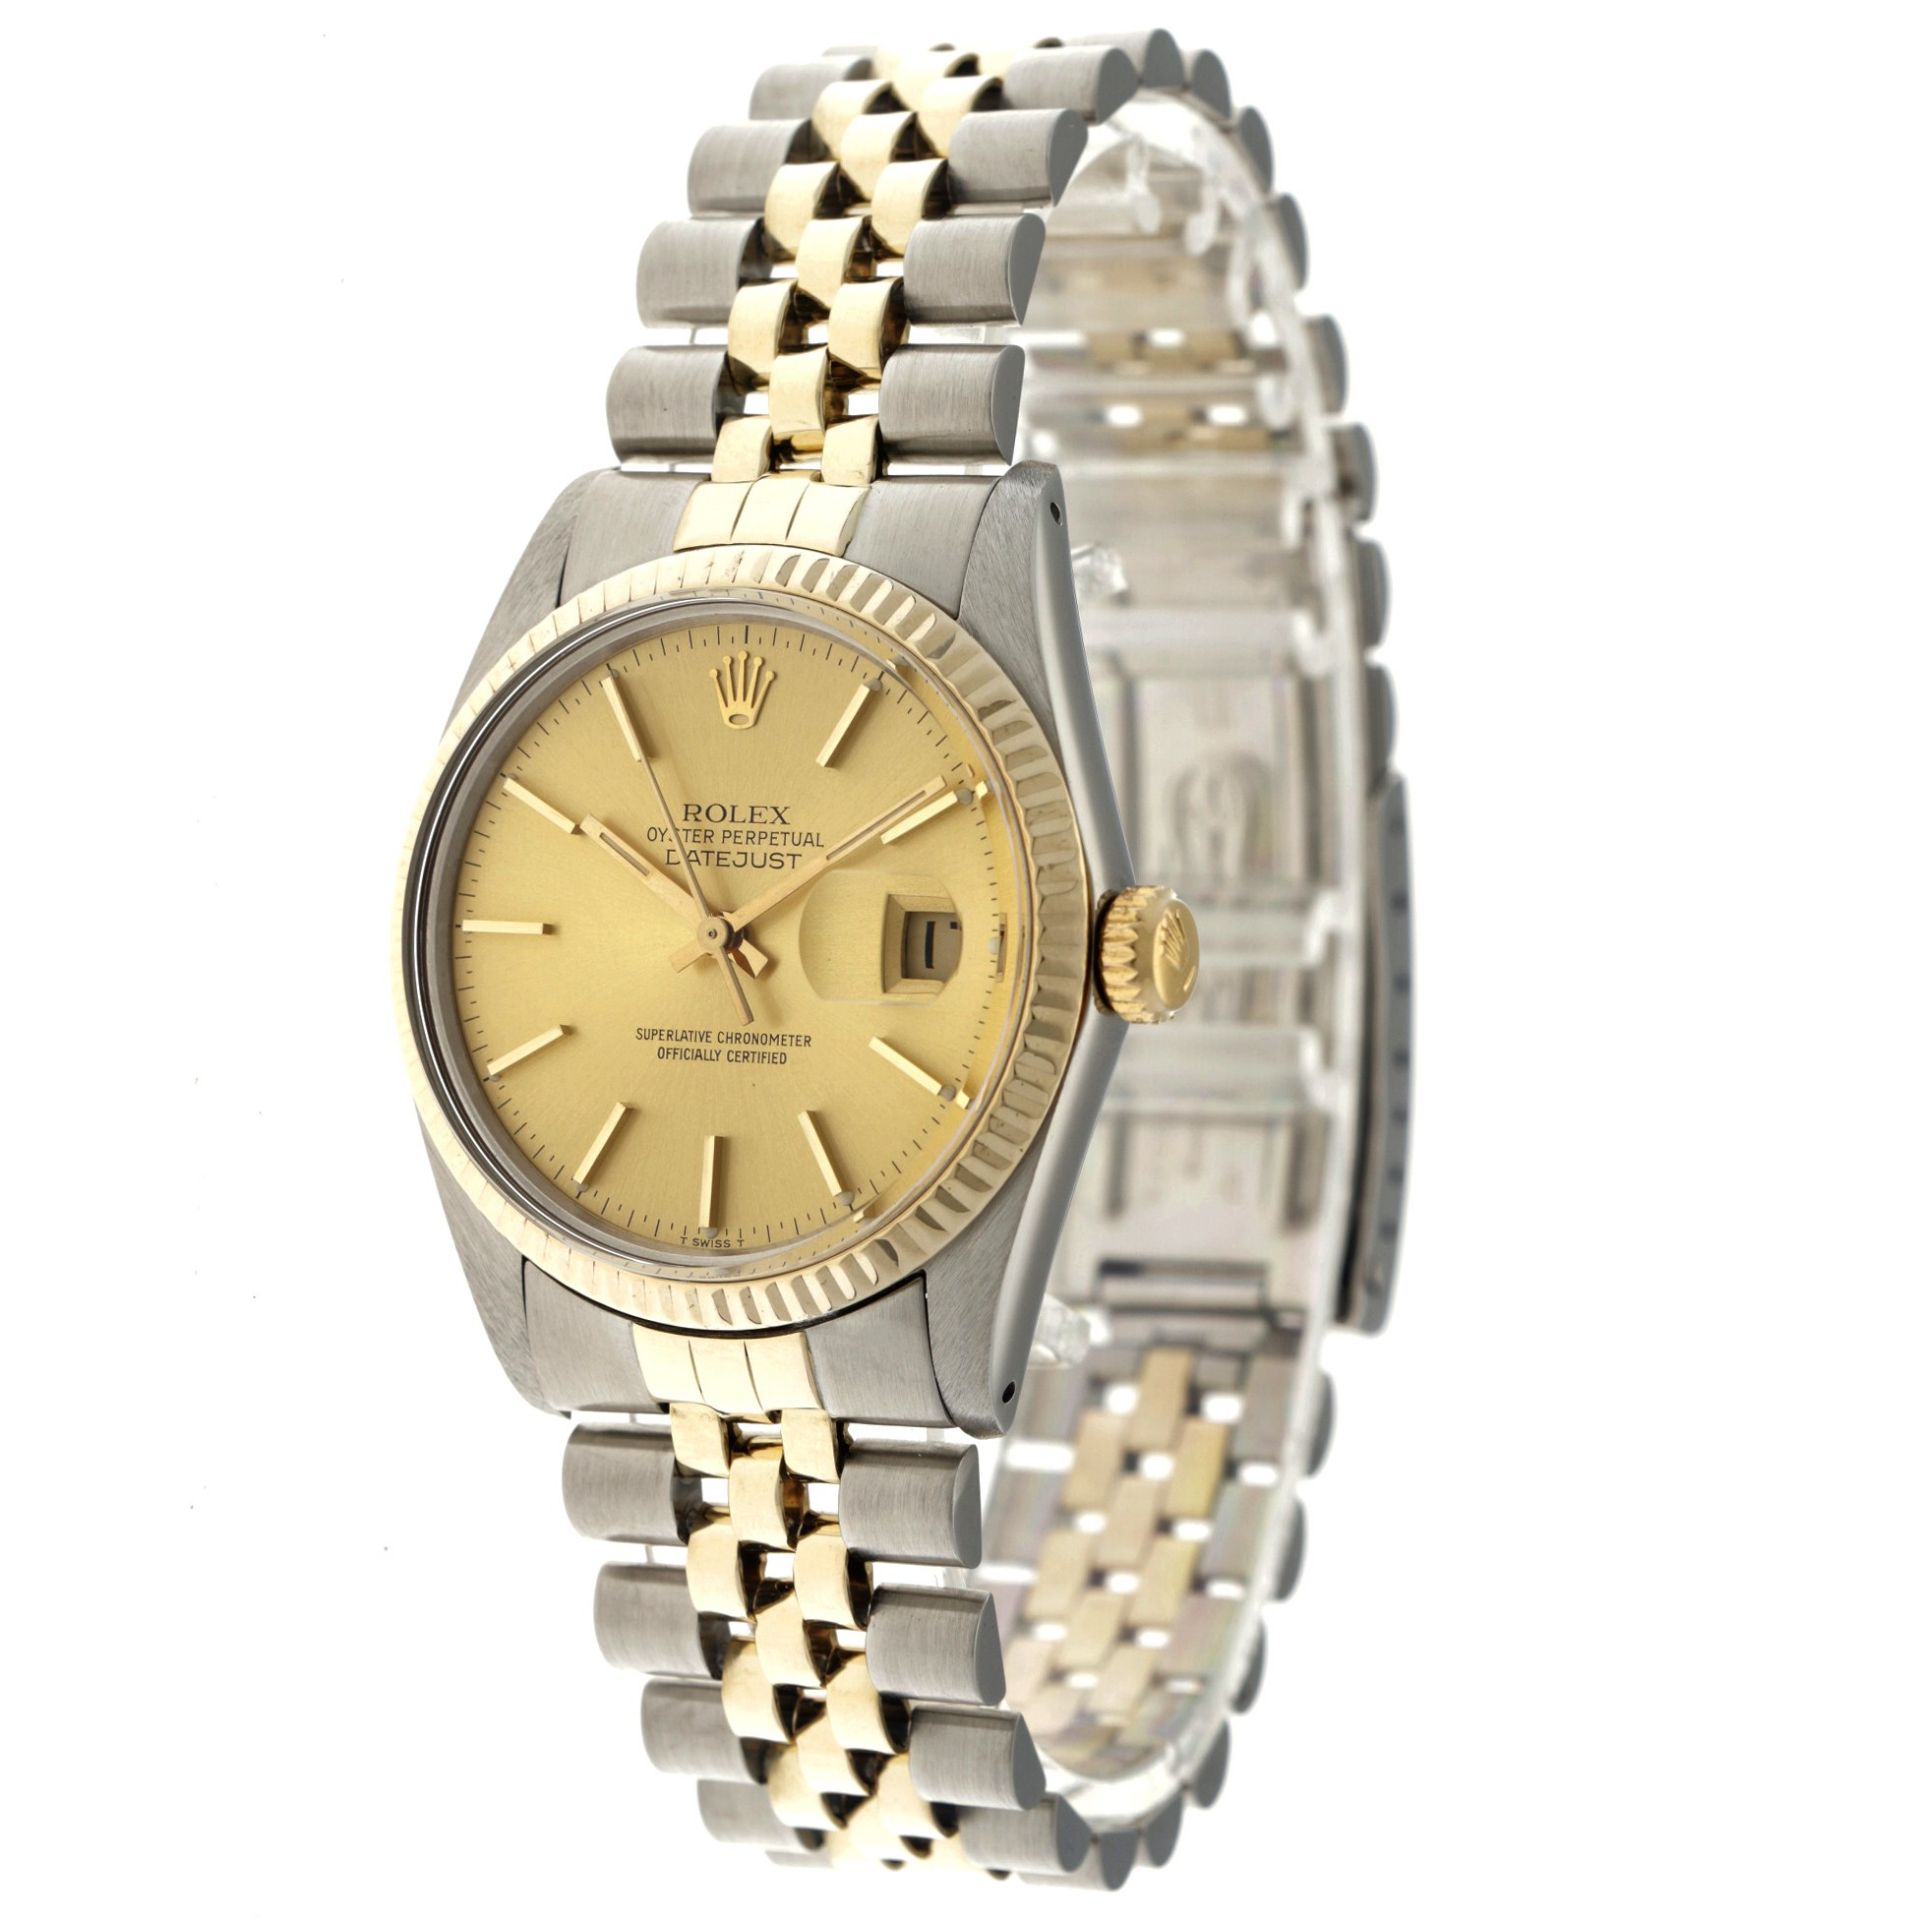 Rolex Datejust 36 16013 - Men's wrist watch - approx. 1982. - Image 2 of 6